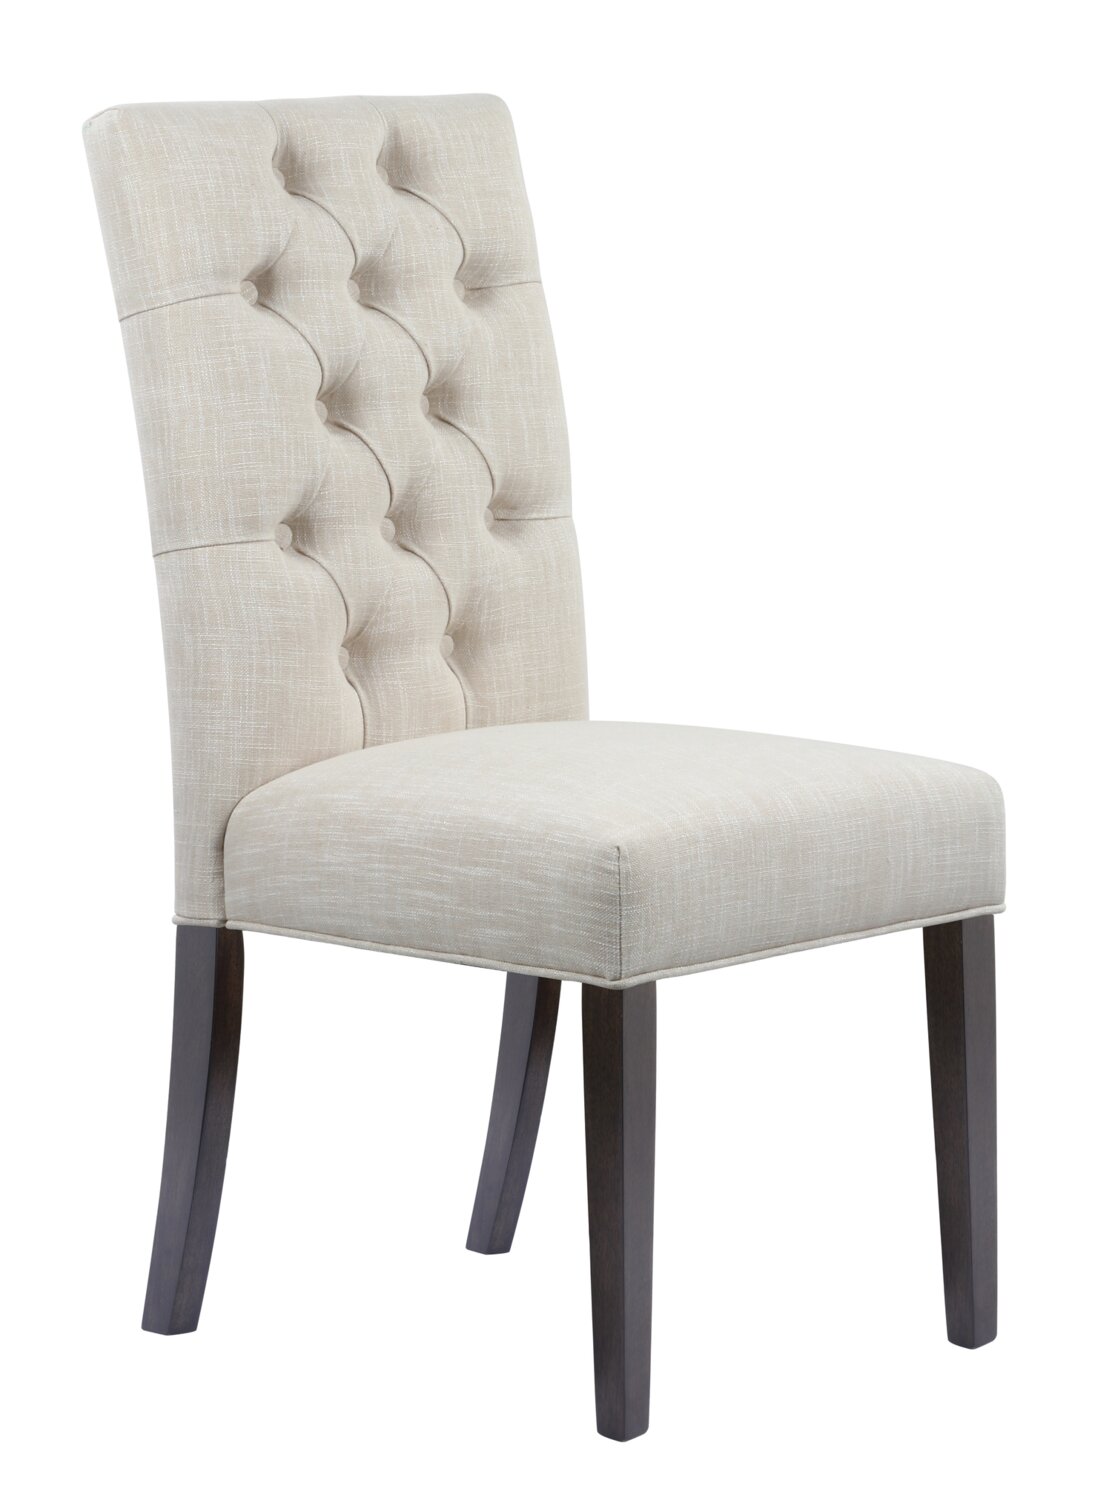 Auberon Side Chair - Ivory